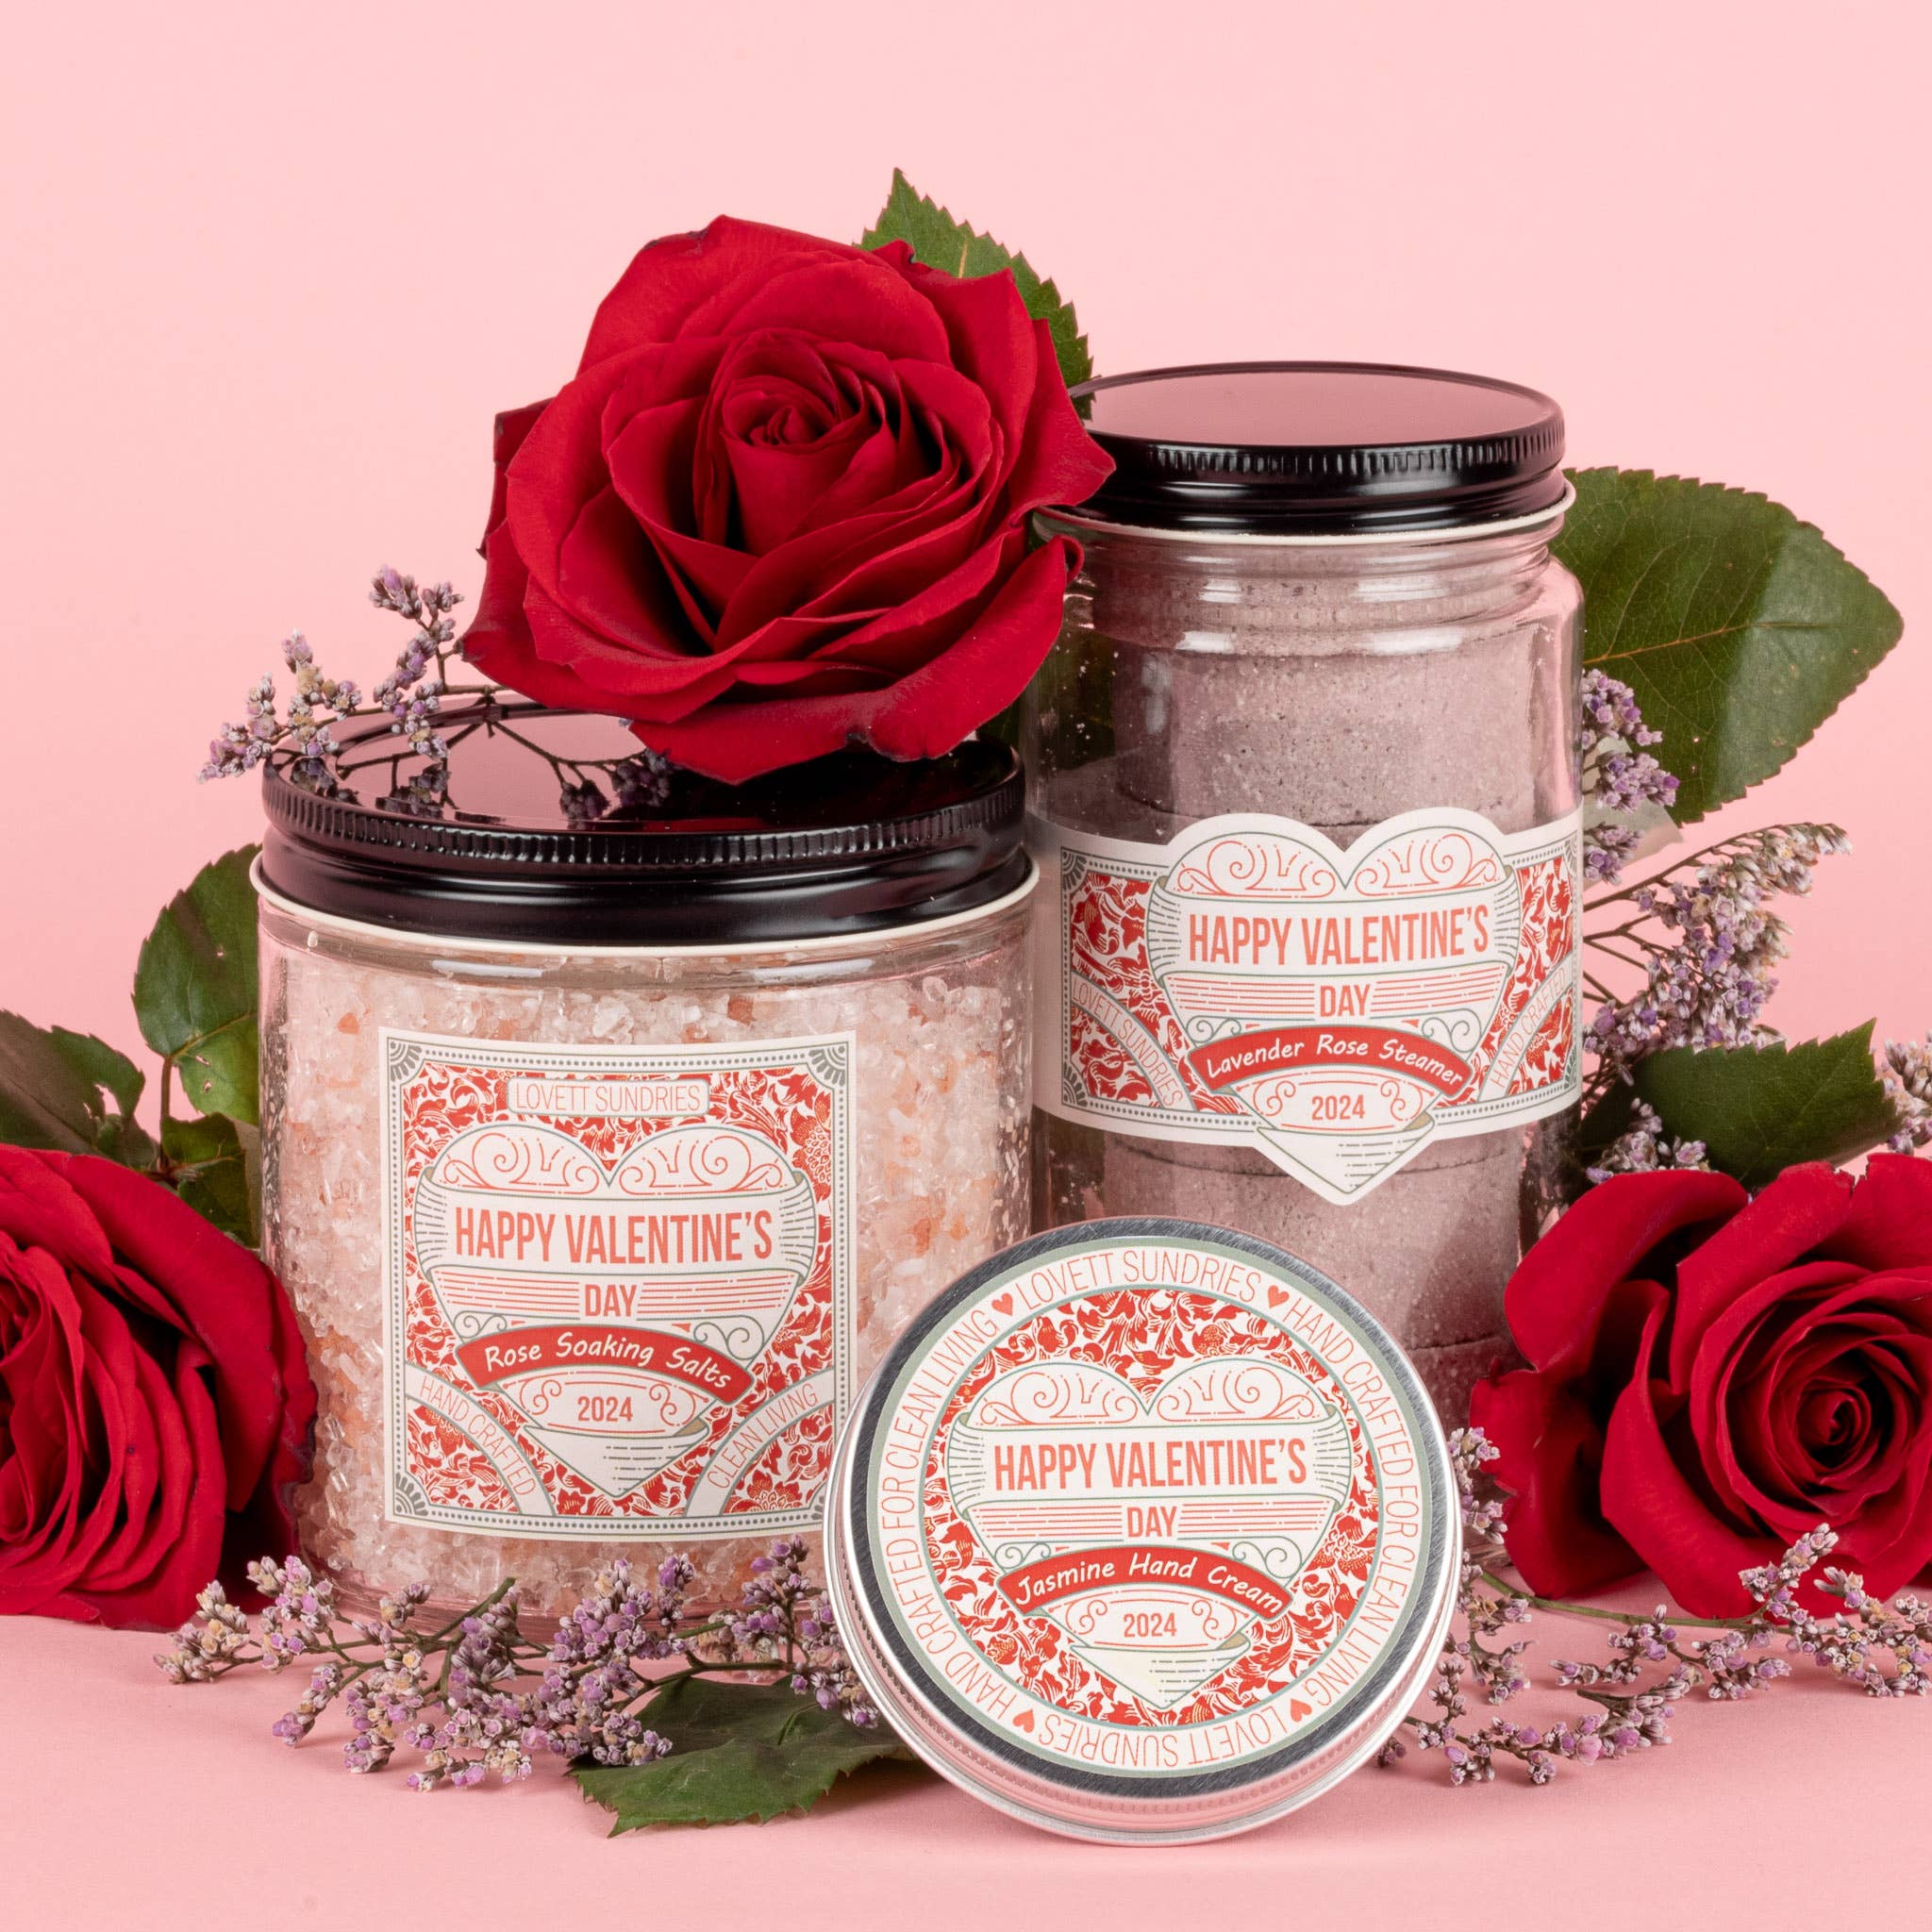 Lovett Sundries - Valentines Day Rose Soaking Salts